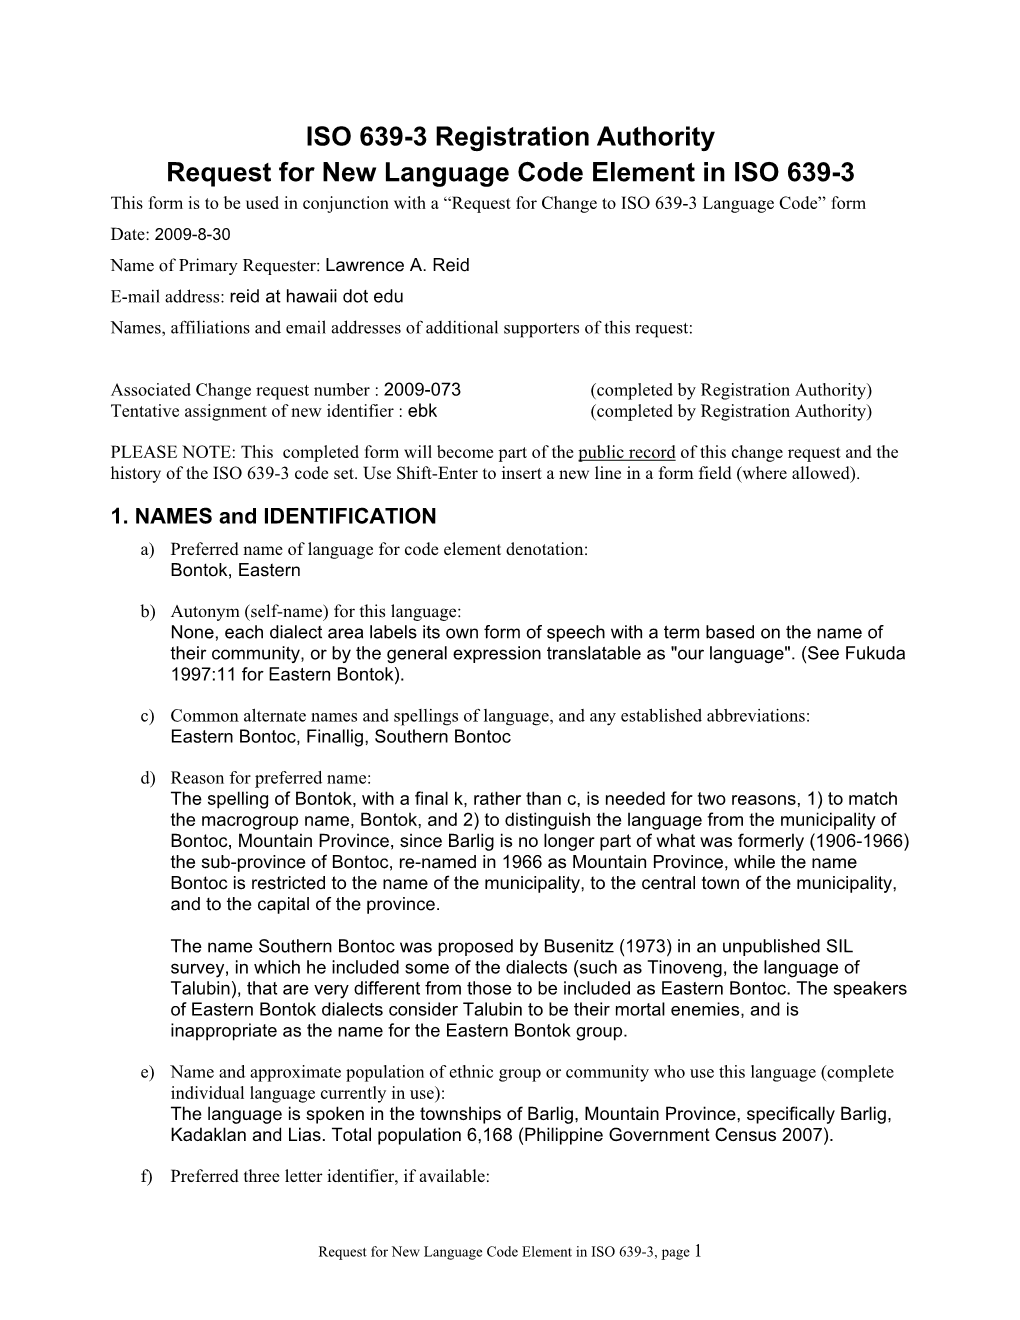 ISO 639-3 New Code Element Request 2009-073 Ebk